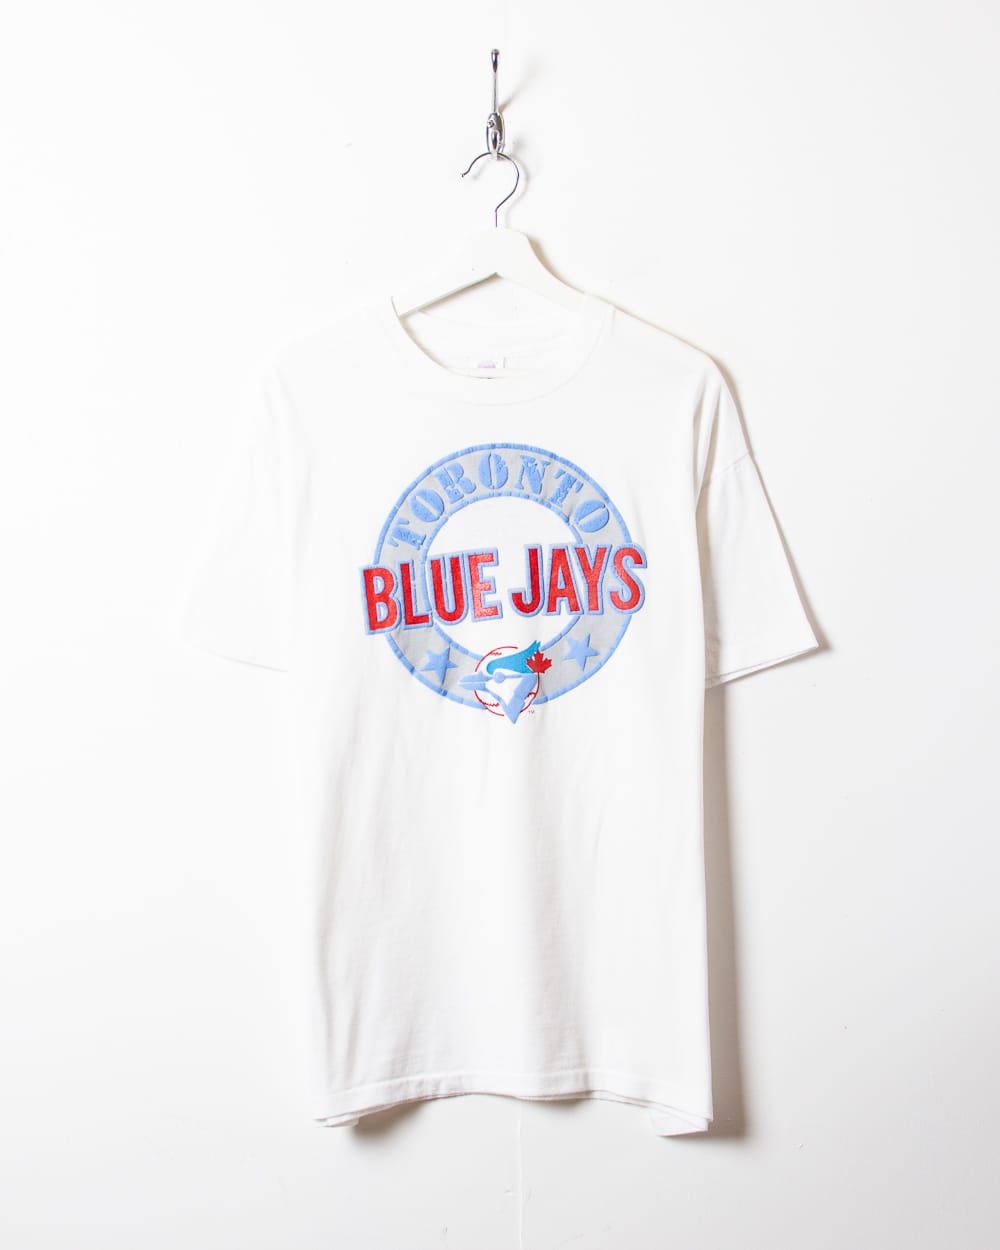 vintage toronto blue jays shirt